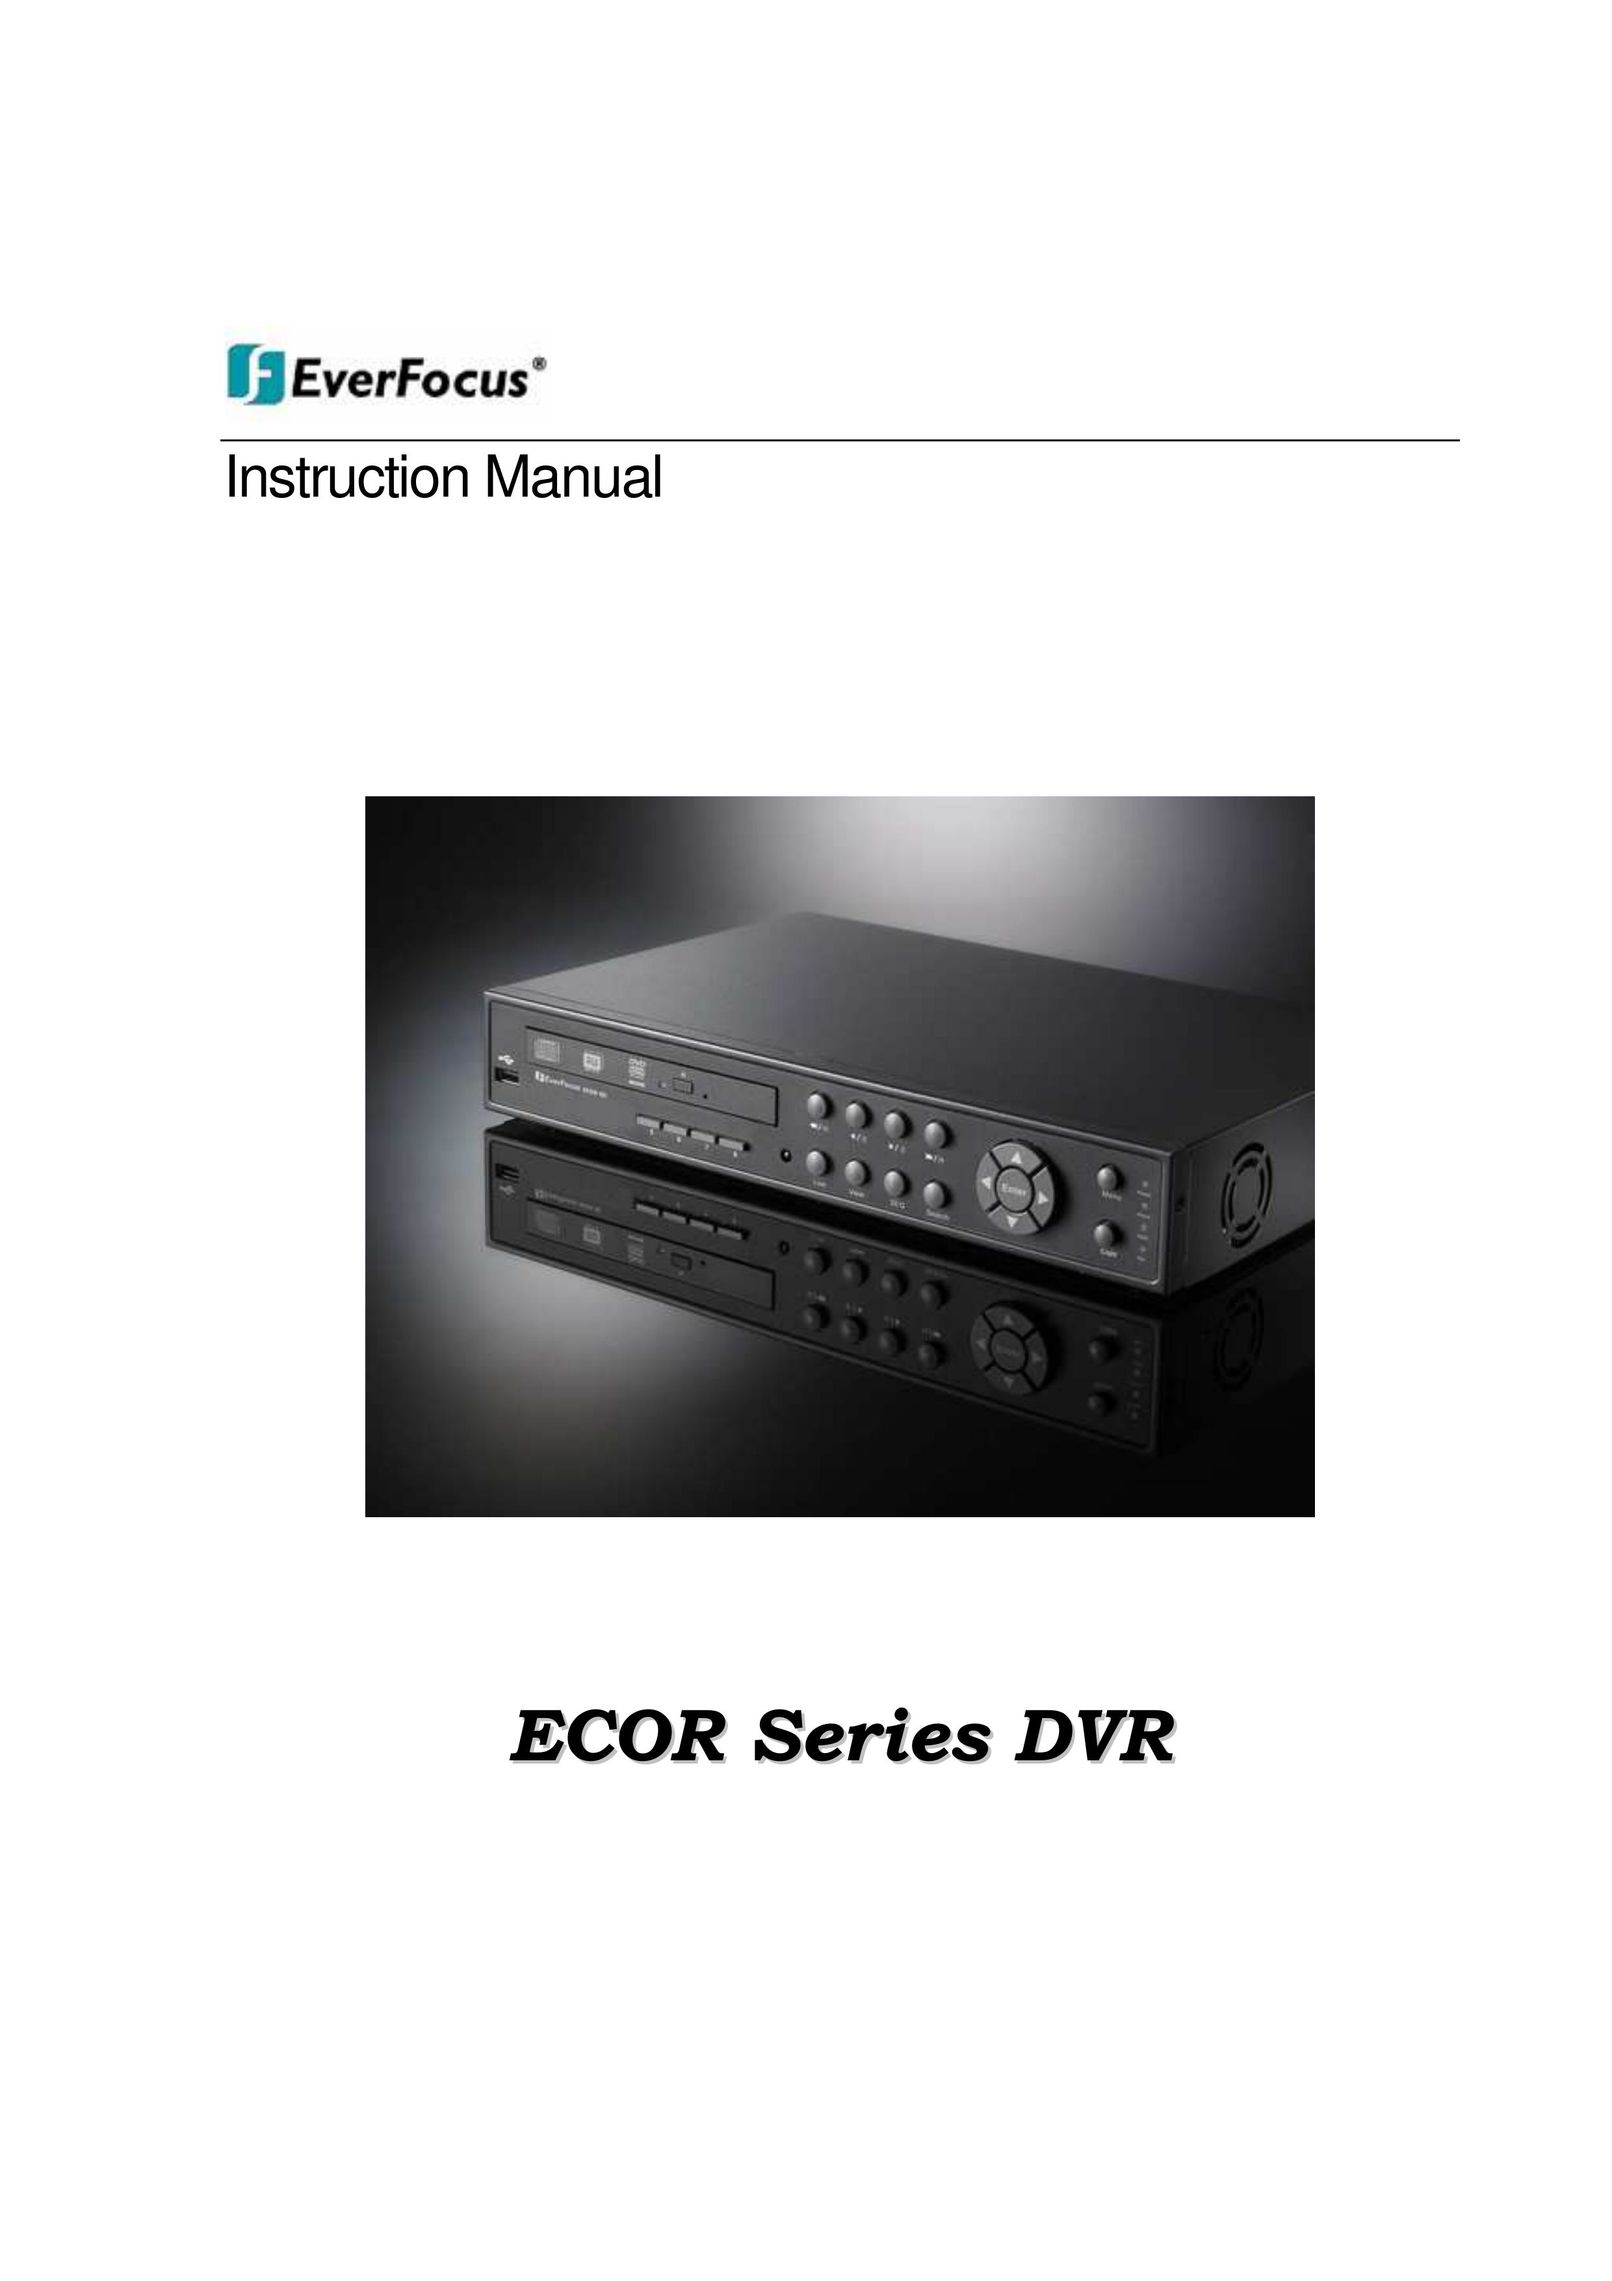 EverFocus EDR 810 DVR User Manual